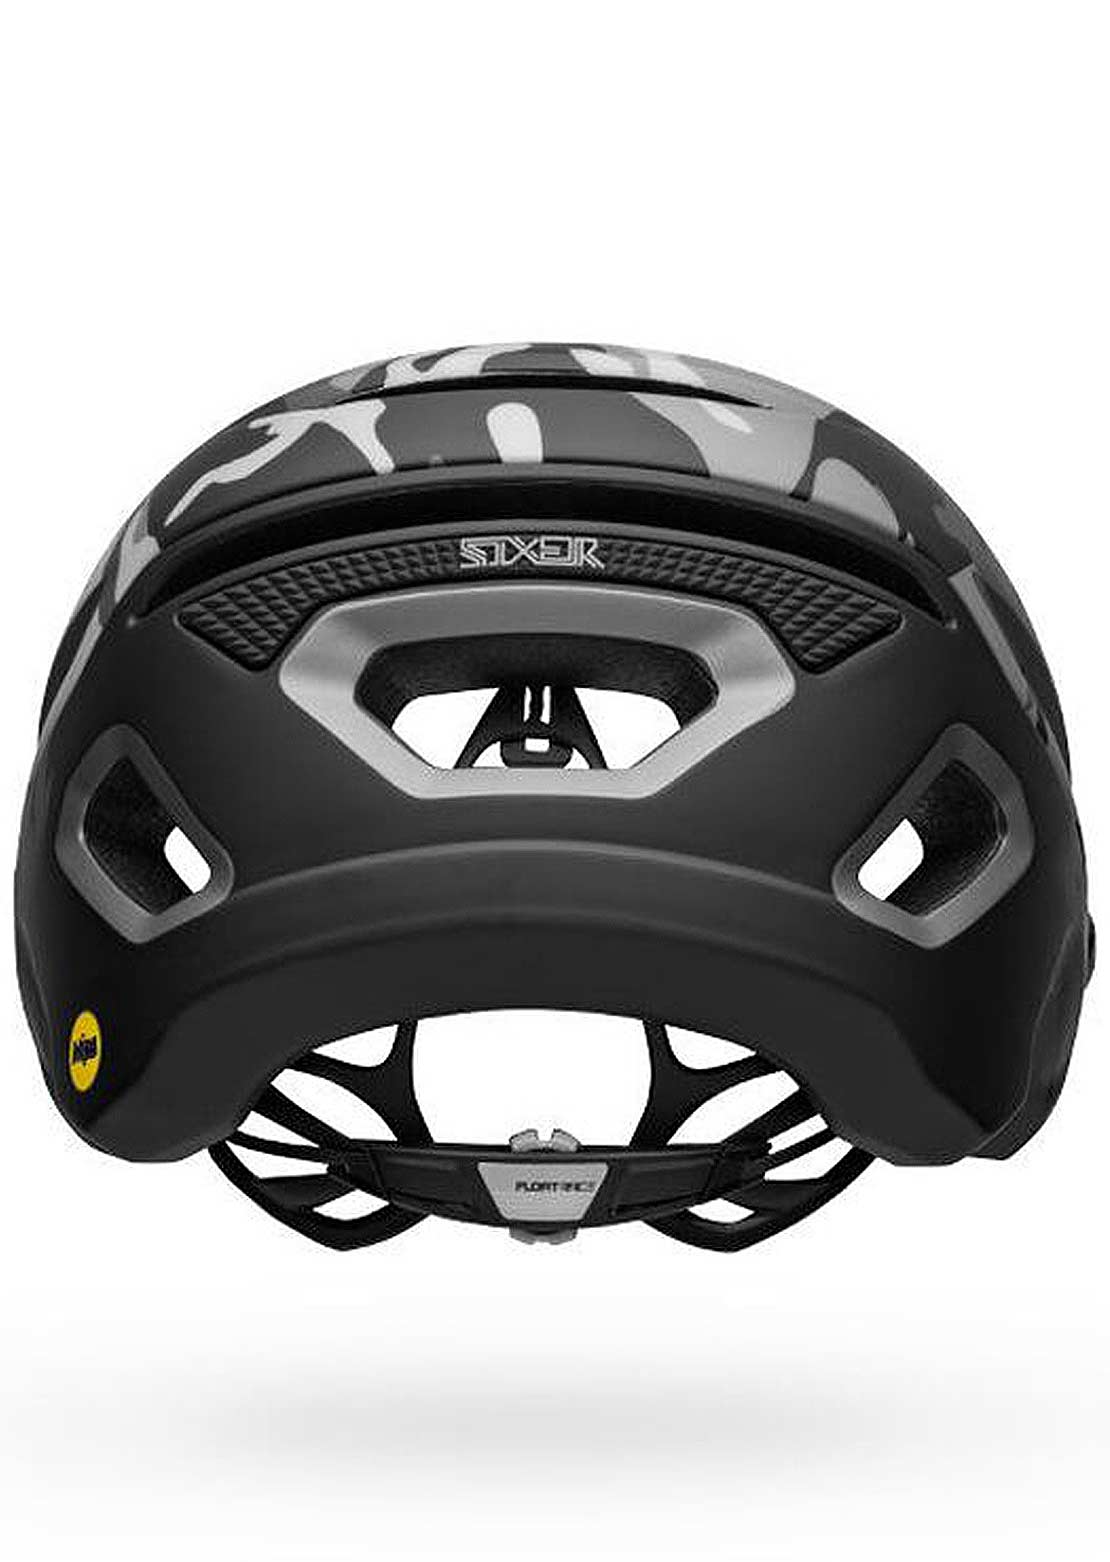 Bell Sixer MIPS Mountain Bike Helmet Matte/Gloss Black Camo